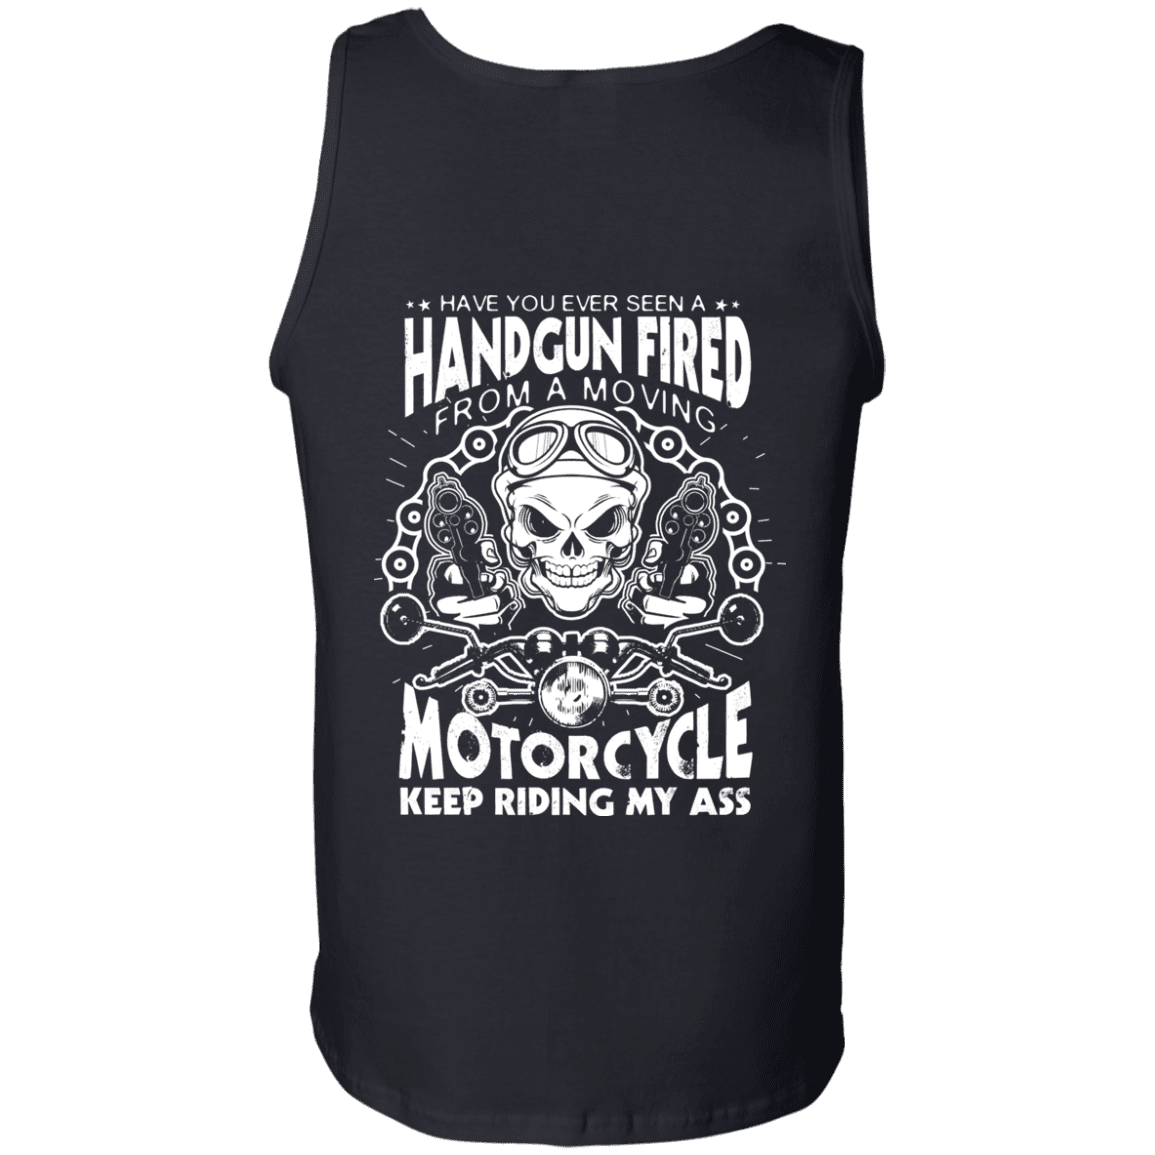 Motorcycle Keep Riding My Ass T-shirt & Hoodies - American Legend Rider